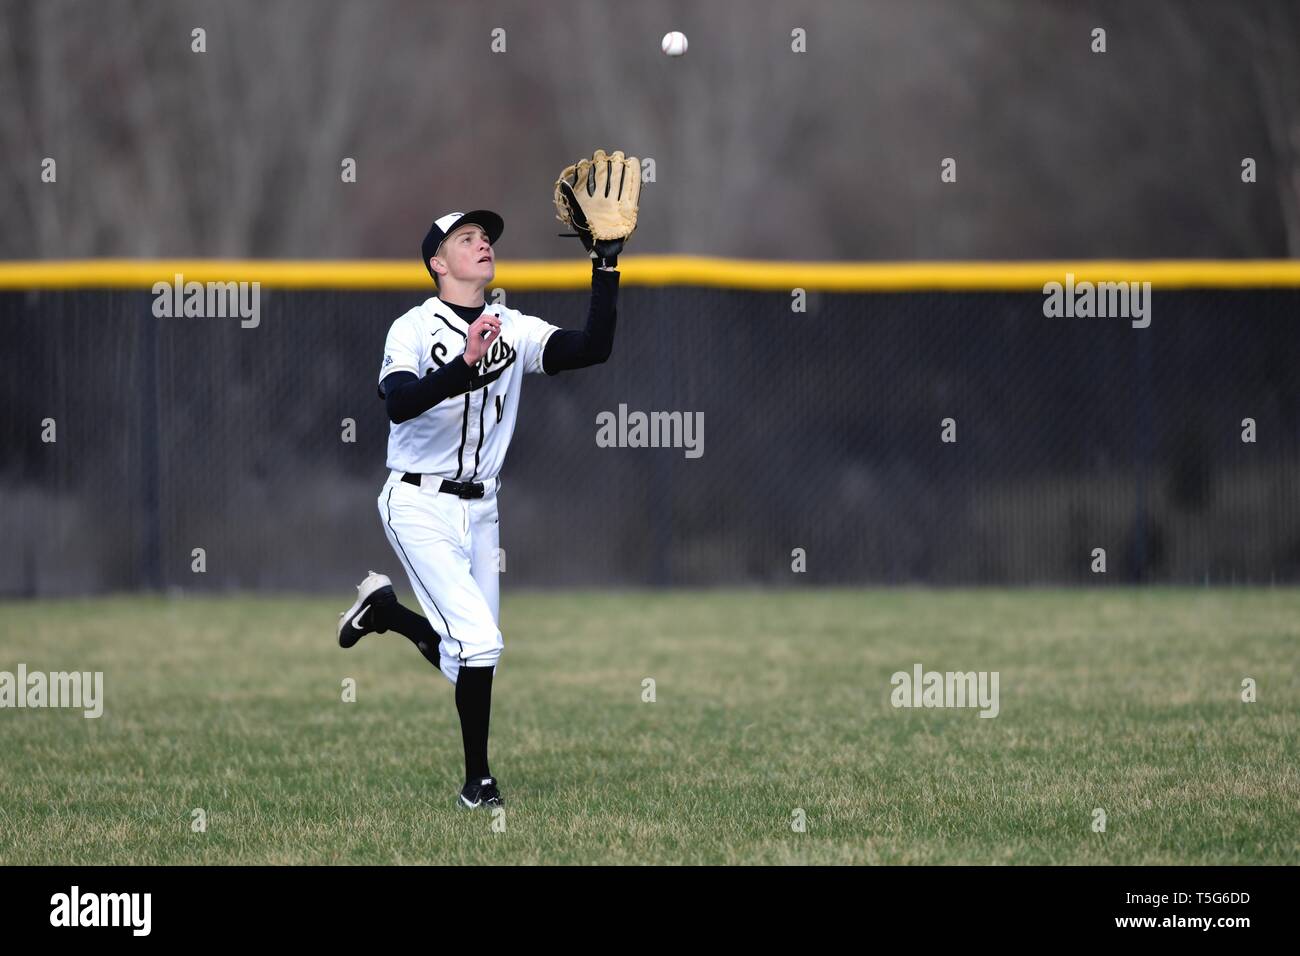 Outfielder facendo una esecuzione di cattura di un fly palla. Stati Uniti d'America. Foto Stock